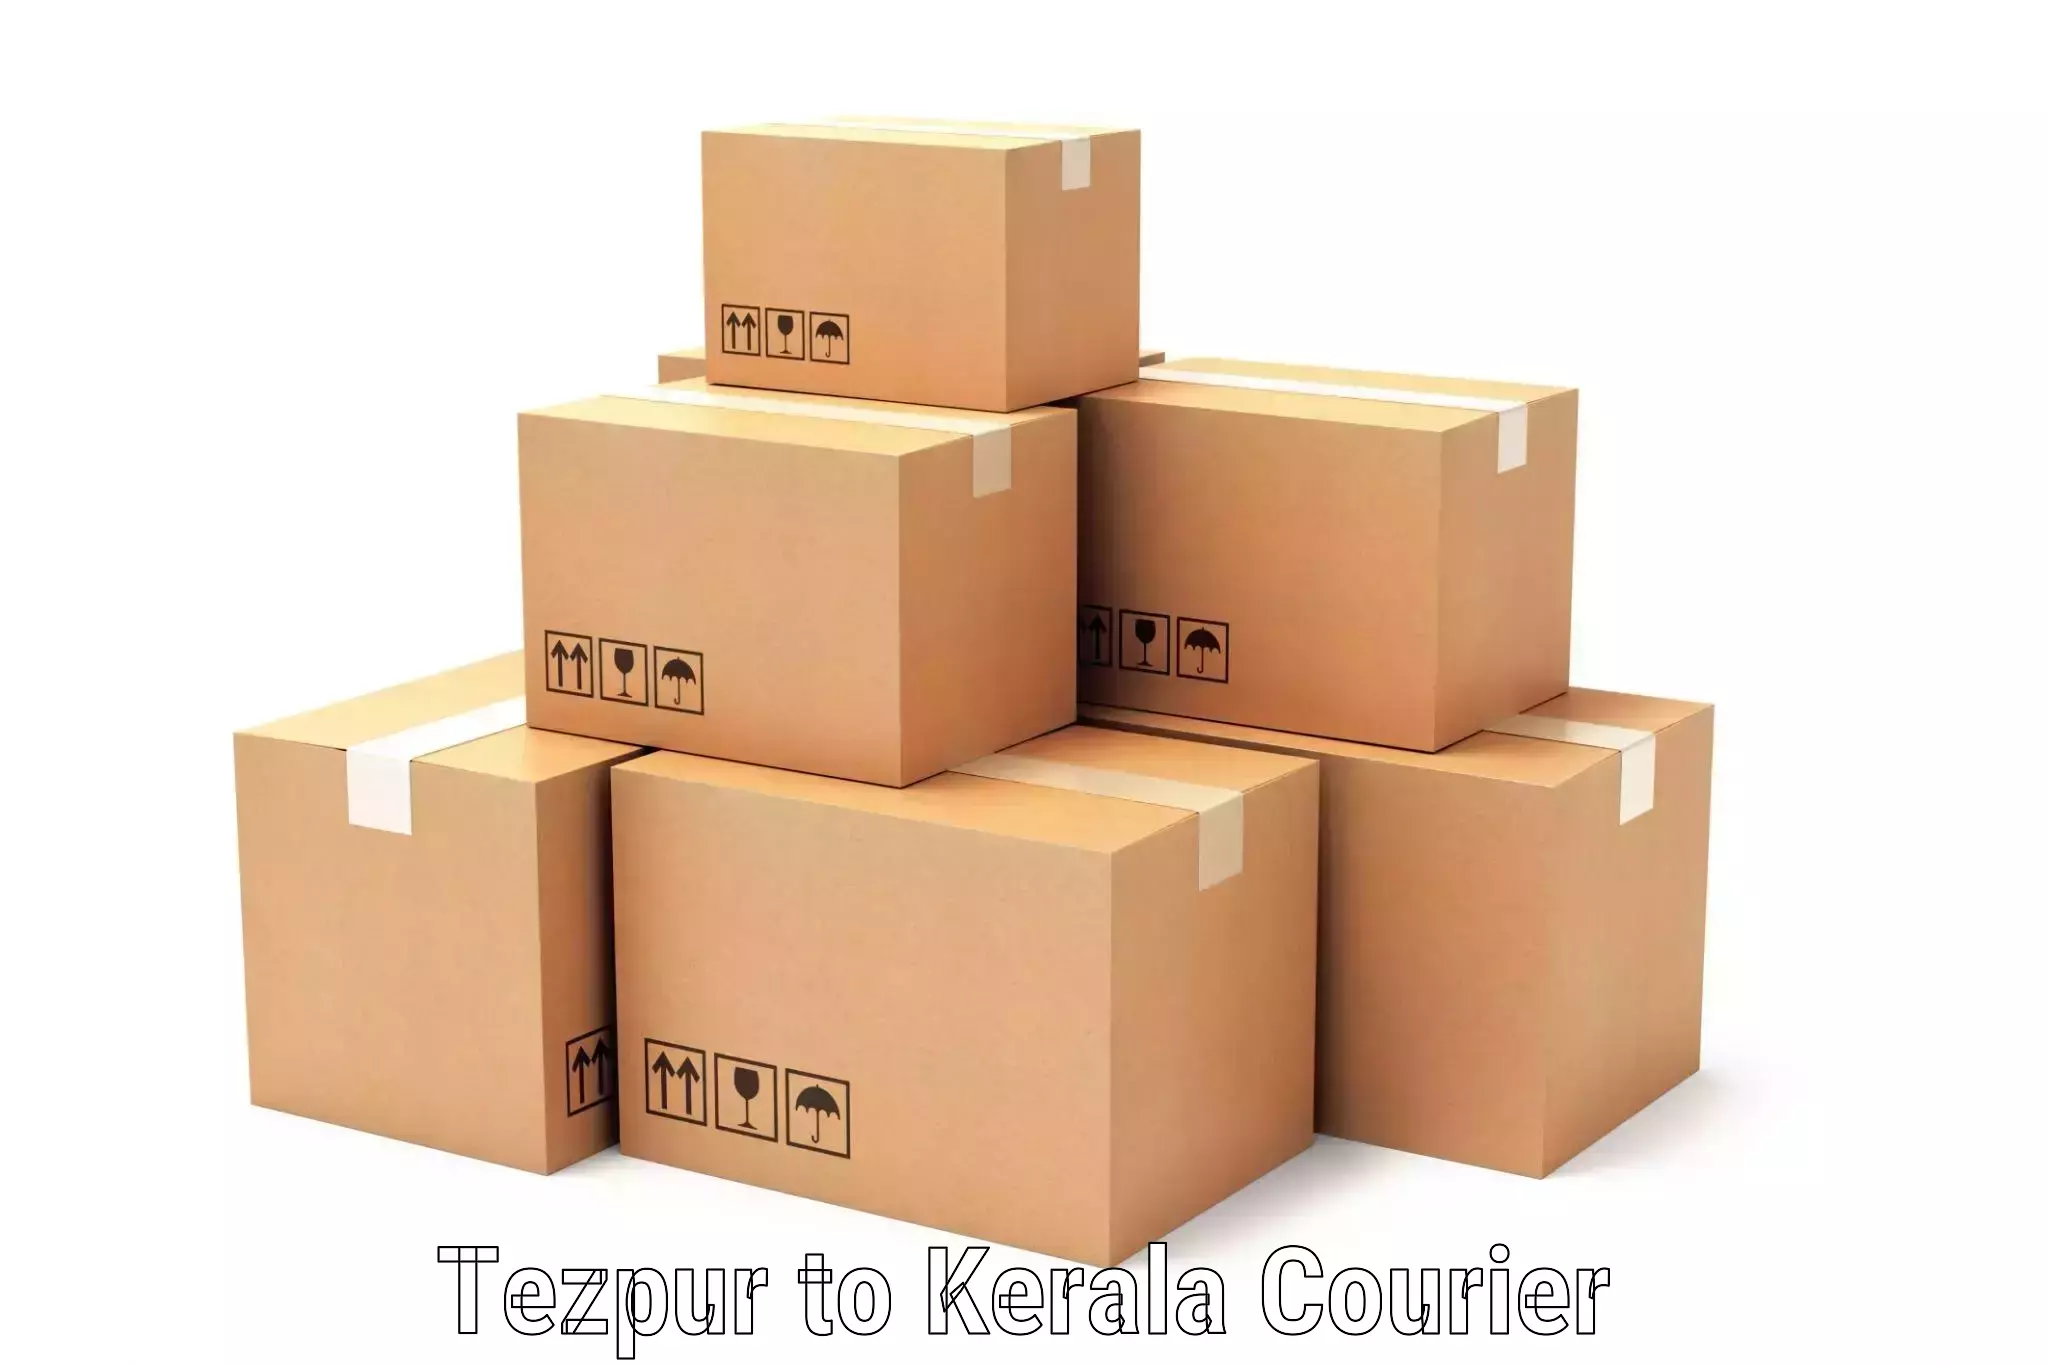 Nationwide delivery network Tezpur to Kazhakkoottam